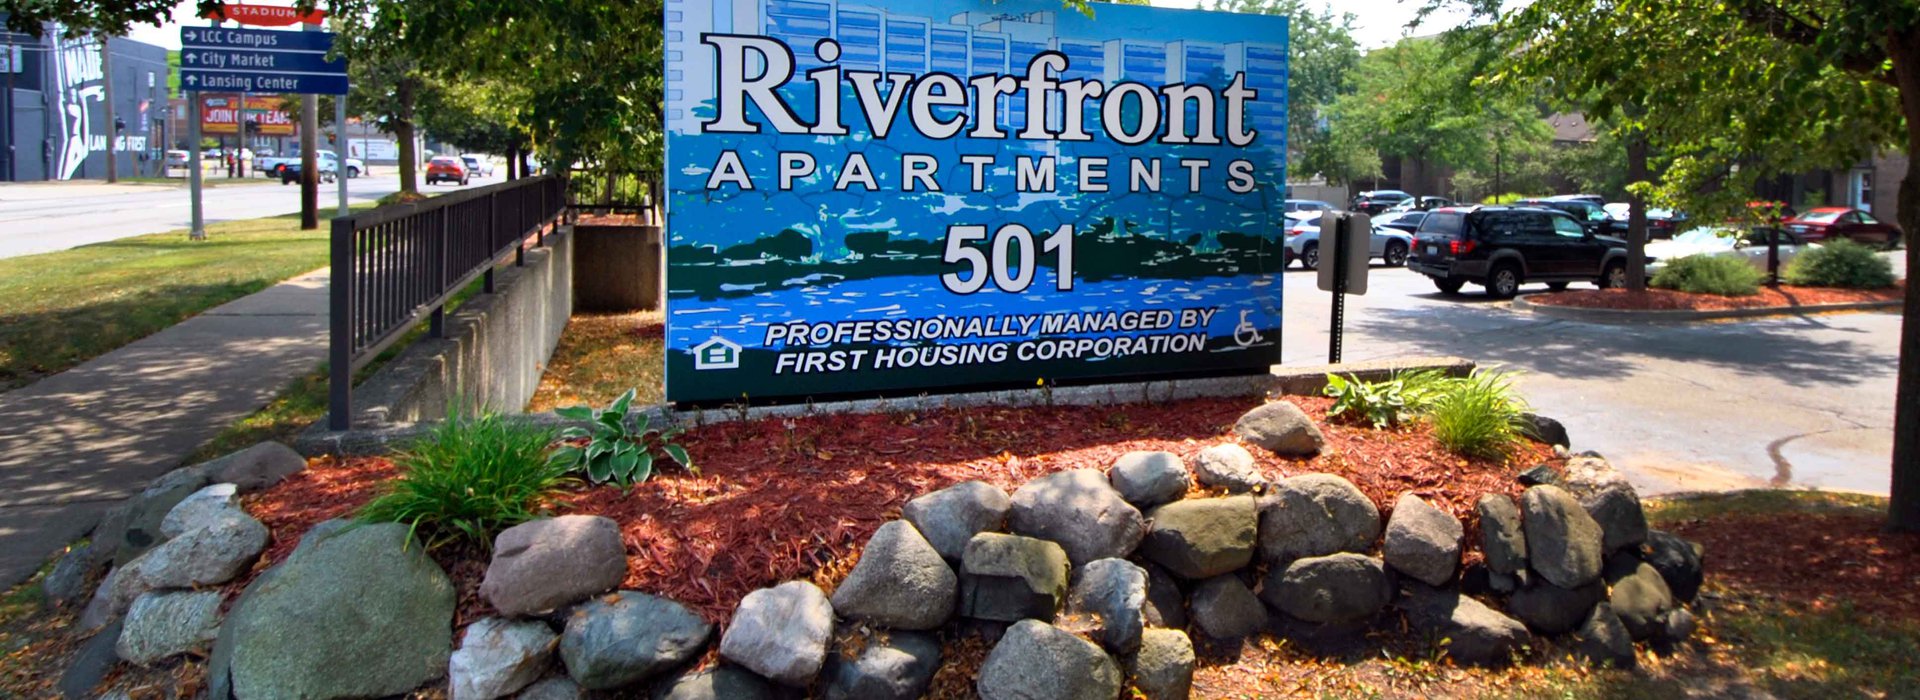 Riverfront sign